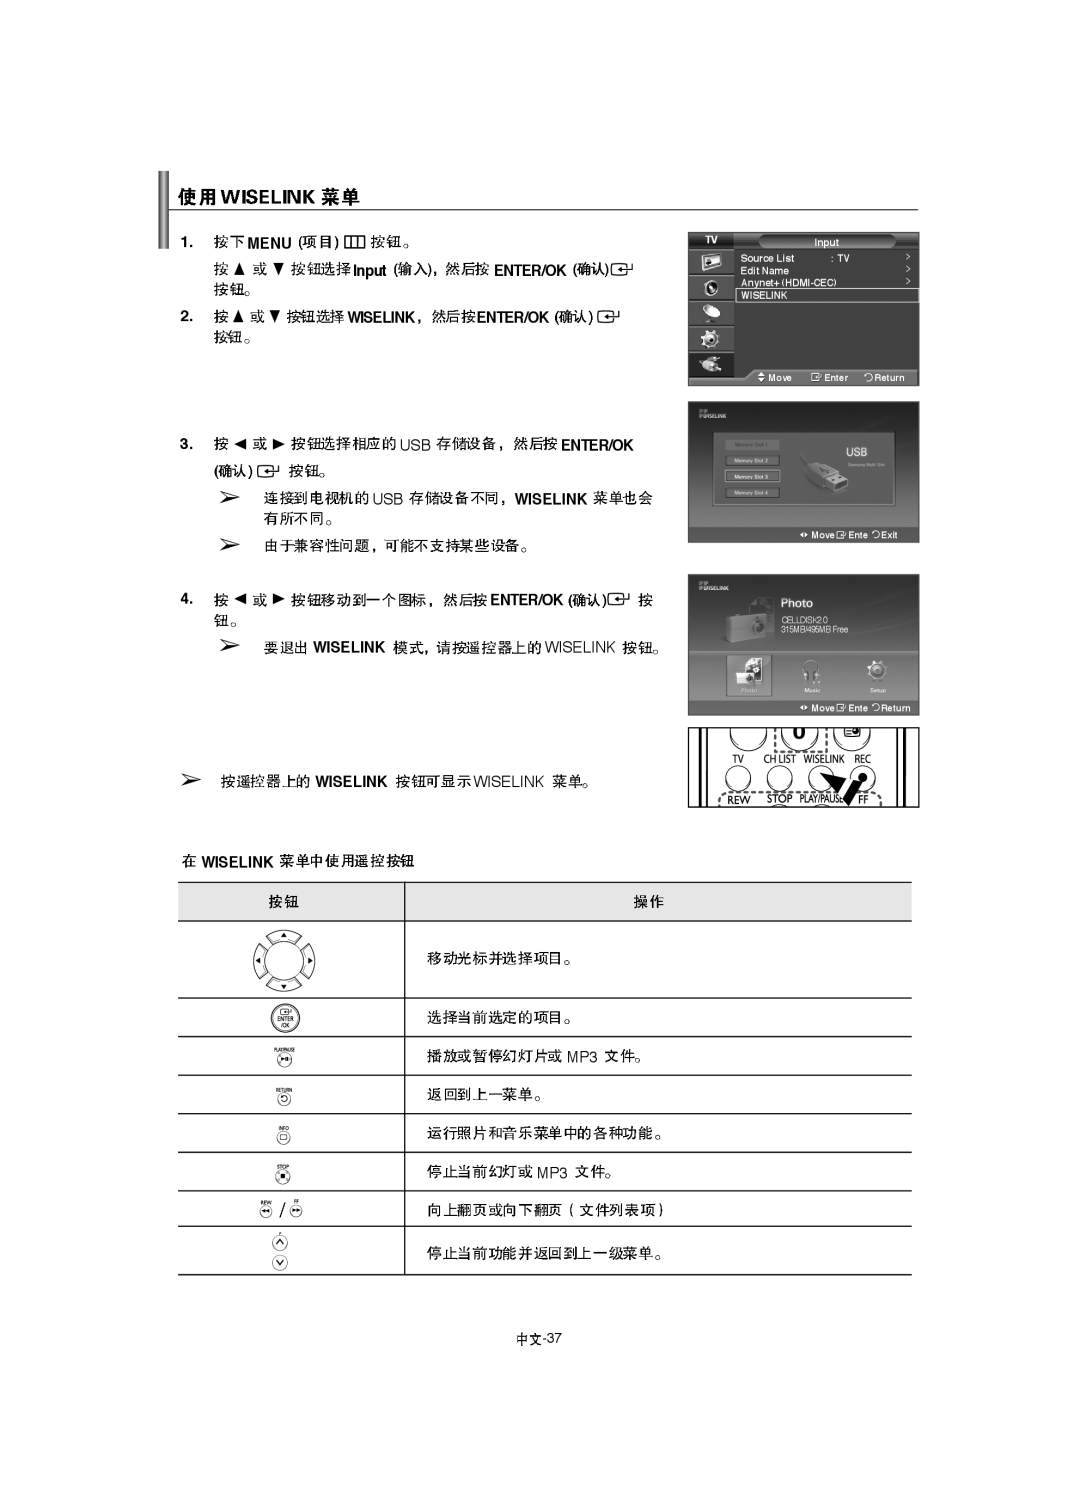 Samsung LA52F8 manual Menu, Input, Enter/Ok, Usb Wiselink, Wiselink Wiselink Wiselink, CELLDISK2.0 315MB/495MB Free 